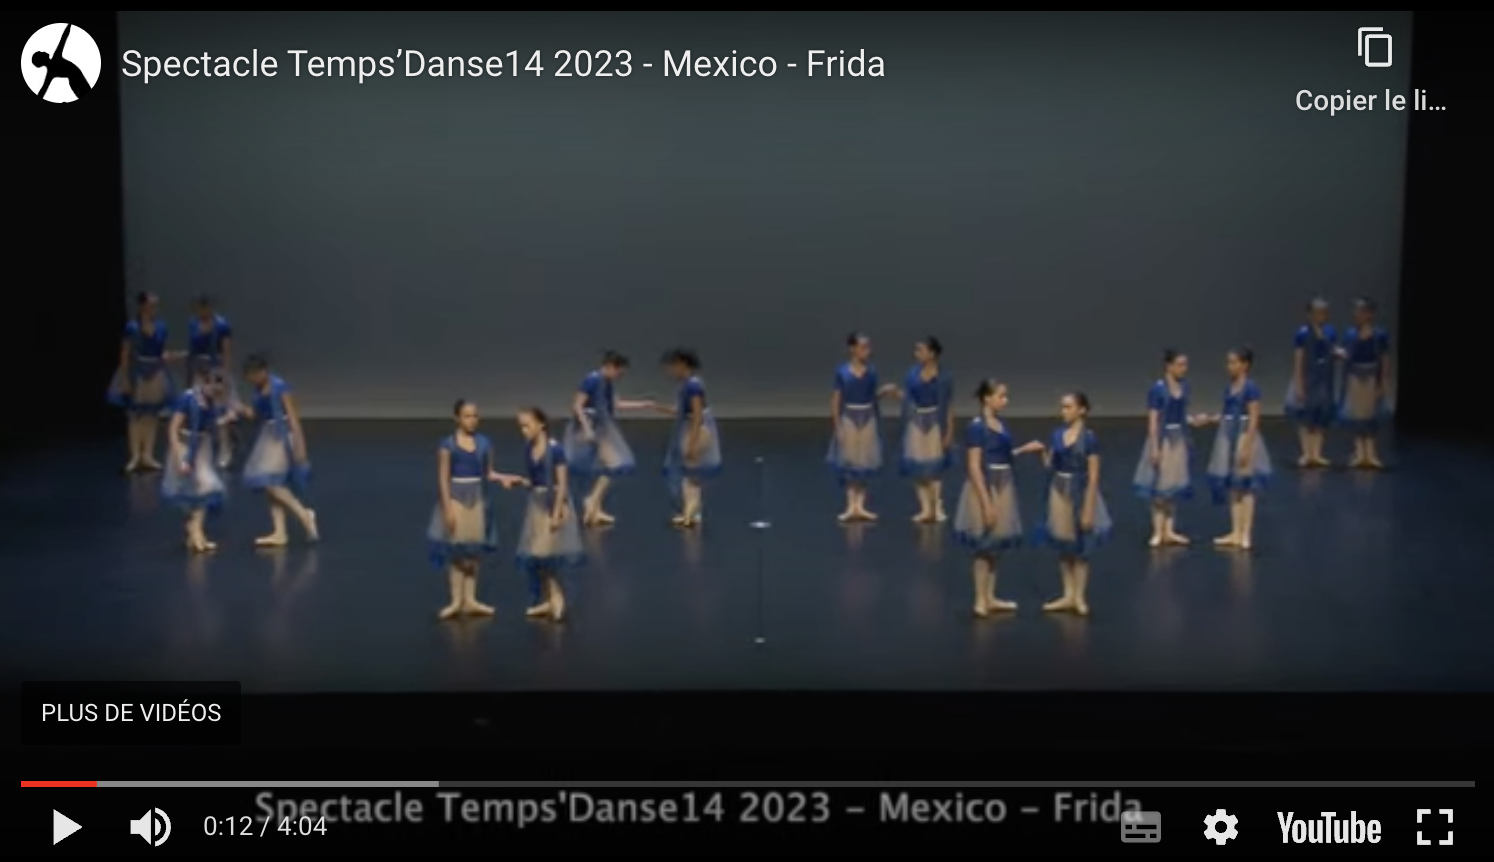 Mexico - Frida